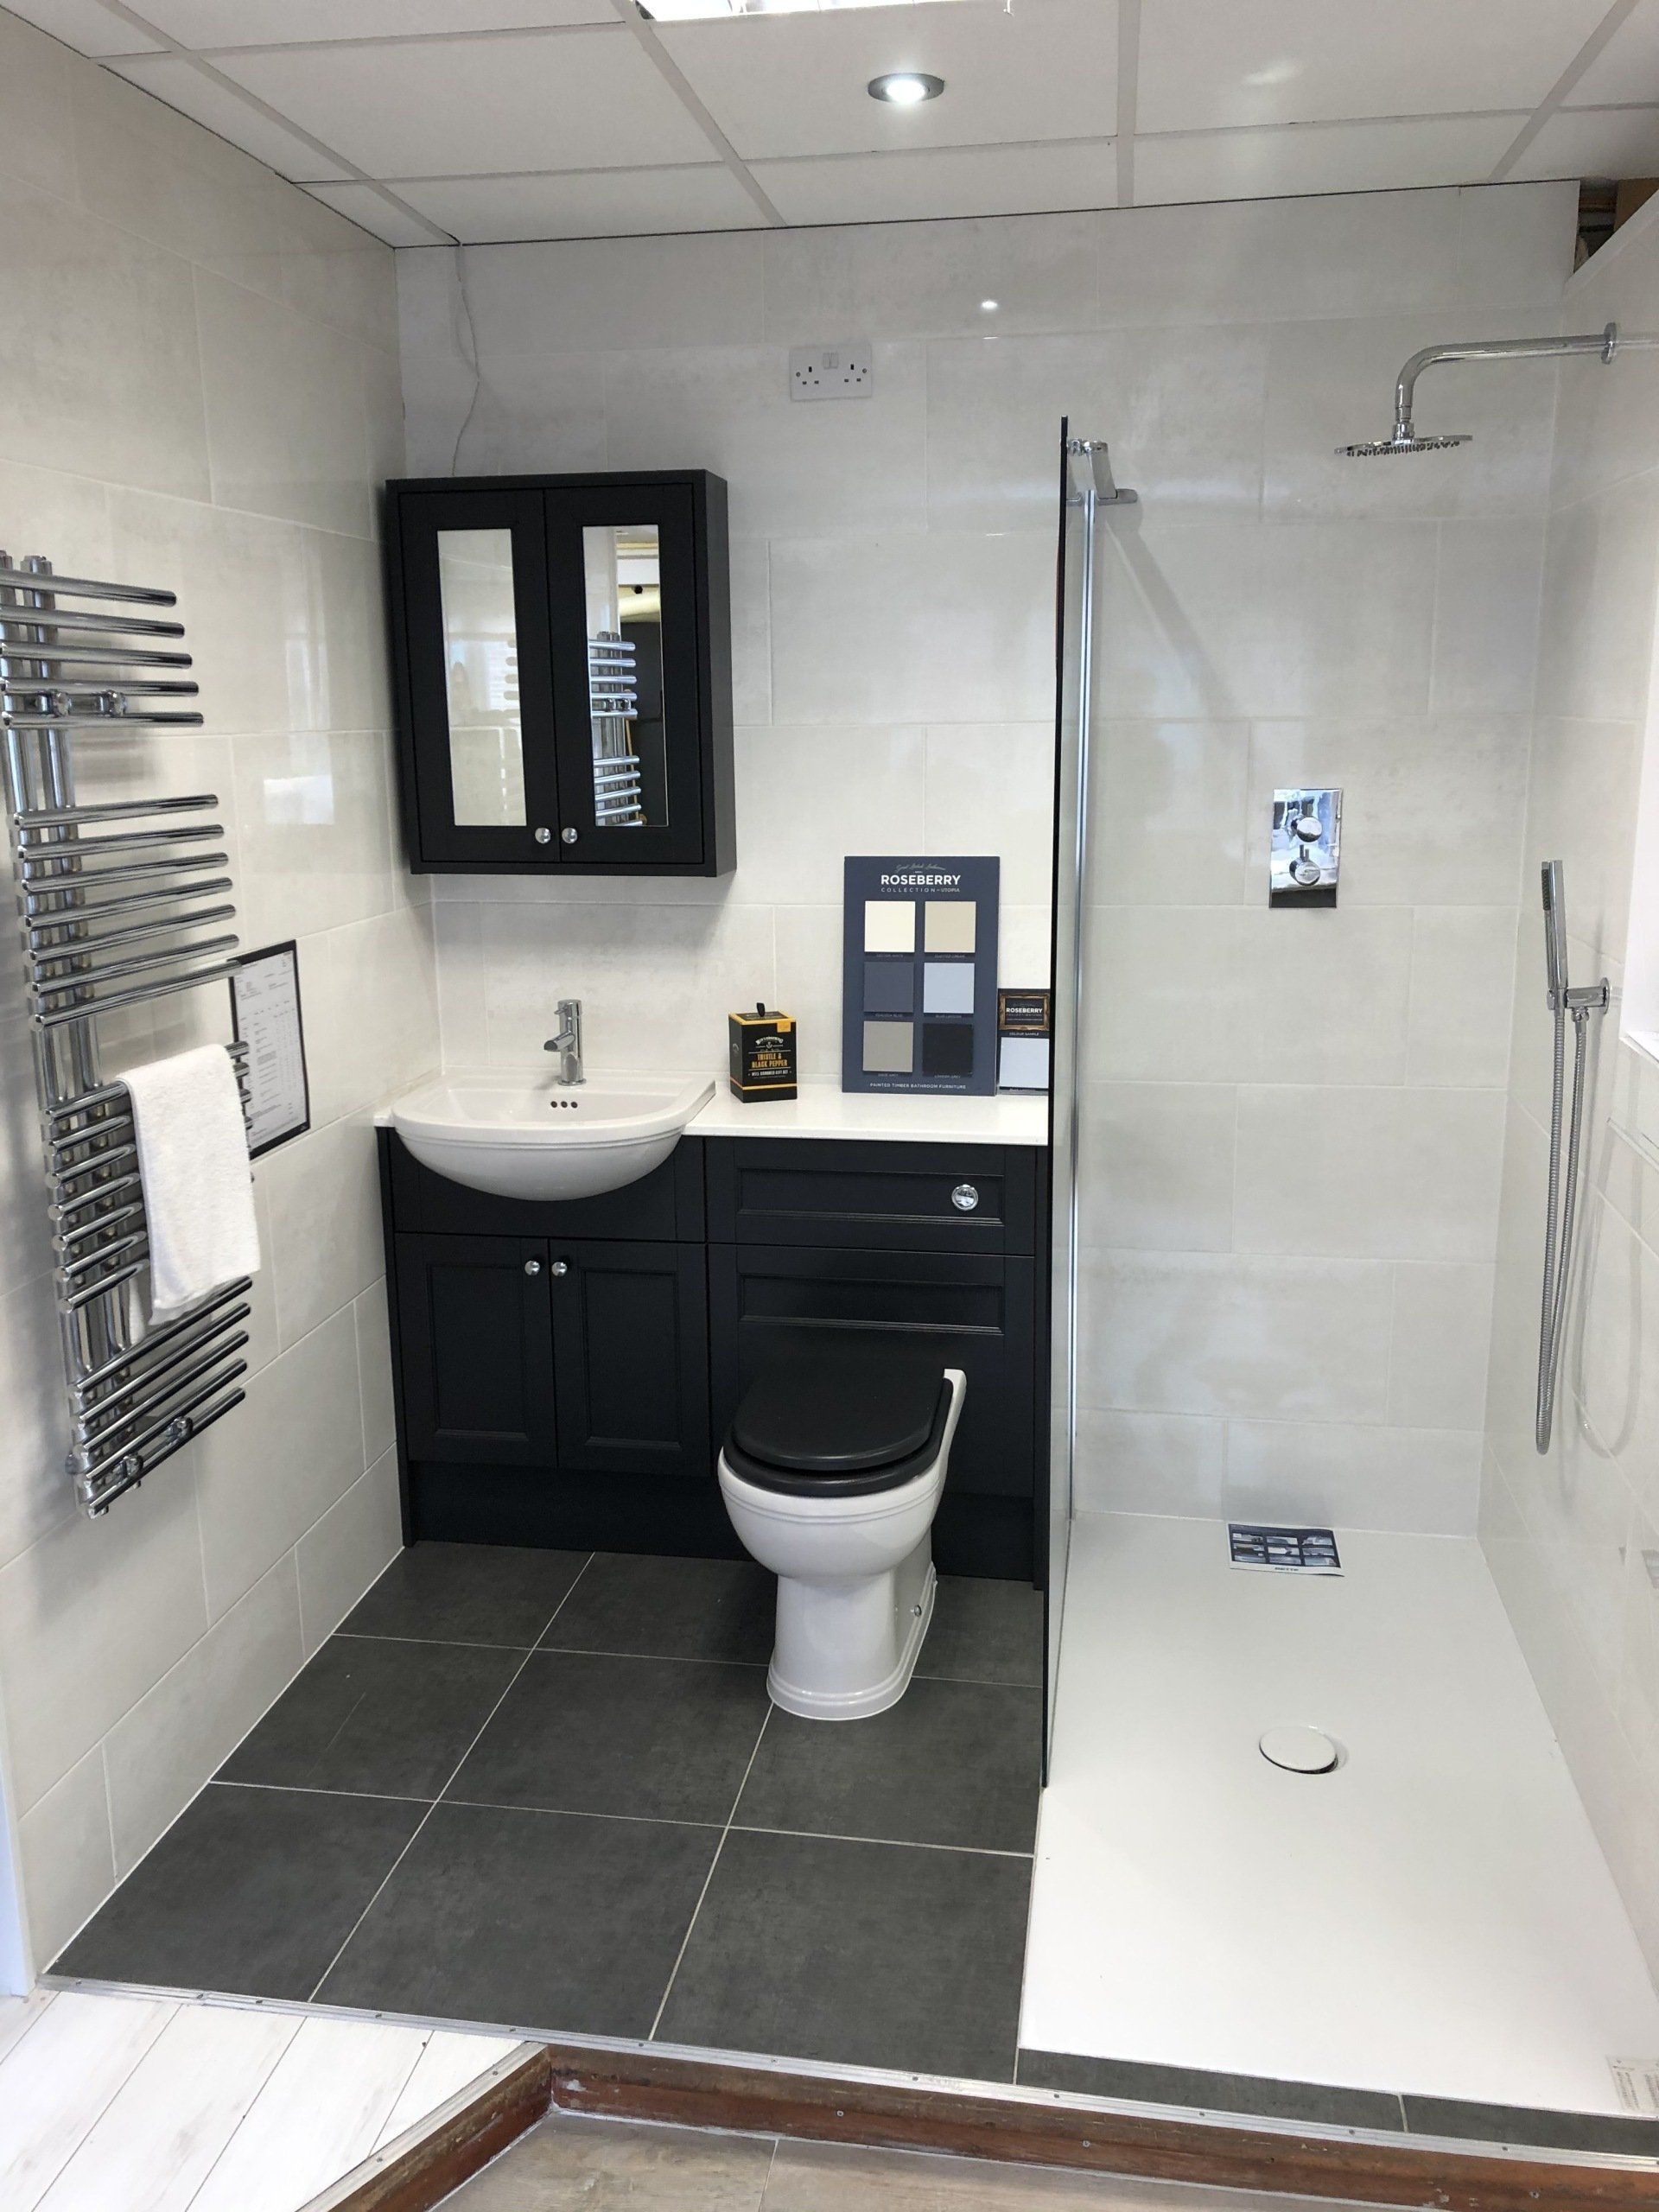 Design Ideas for Small Bathrooms